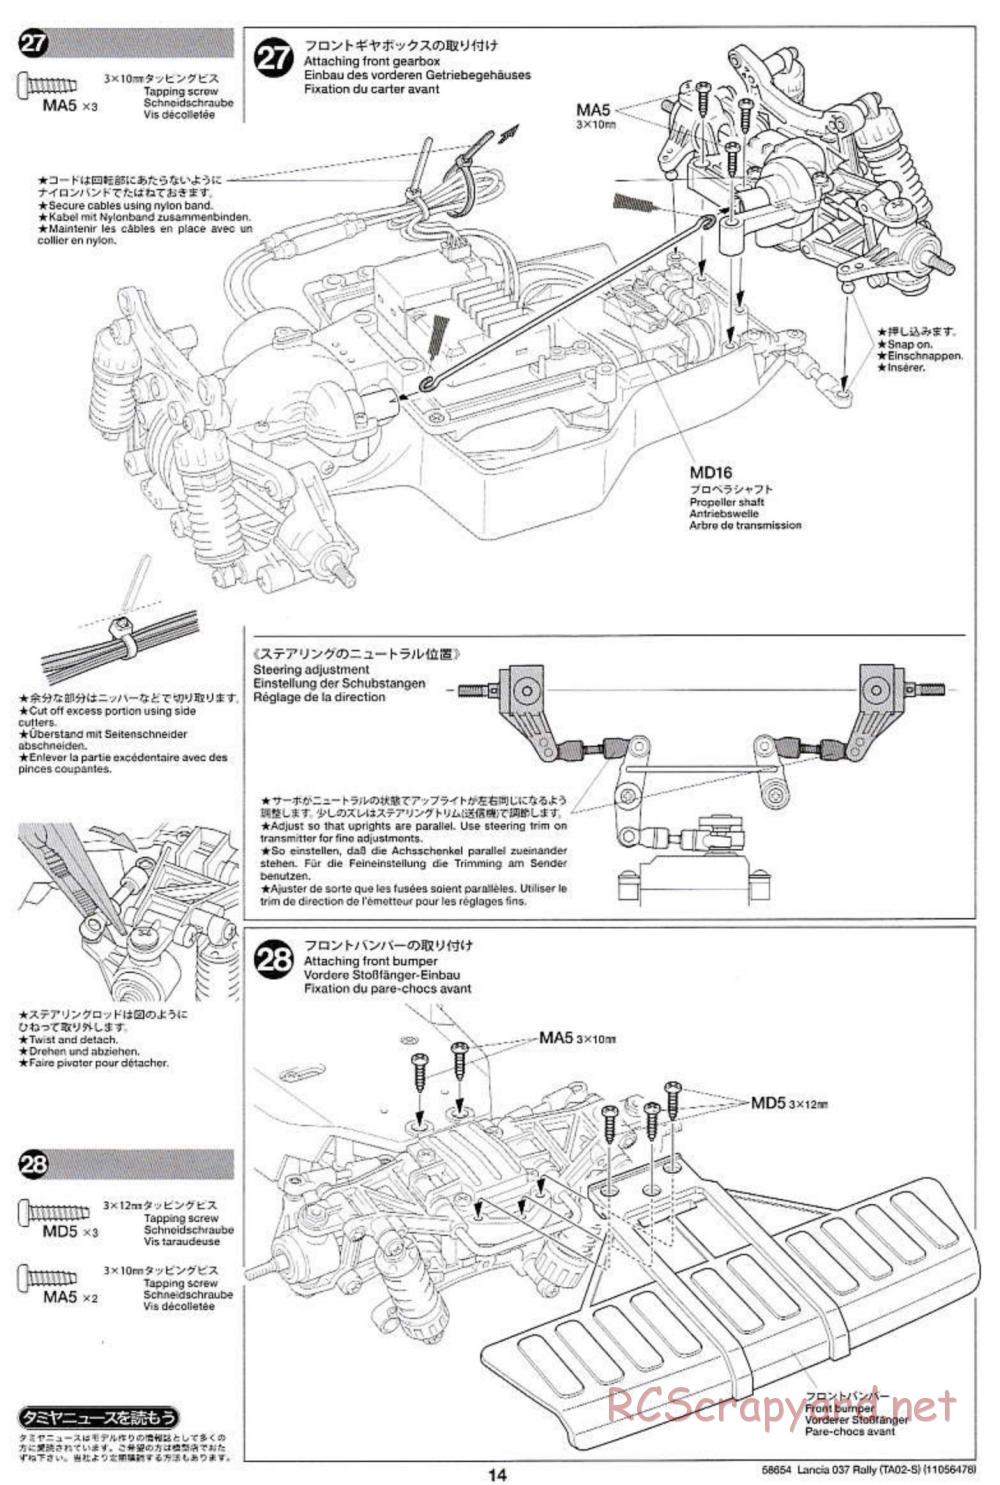 Tamiya - Lancia 037 Rally Chassis - Manual - Page 14